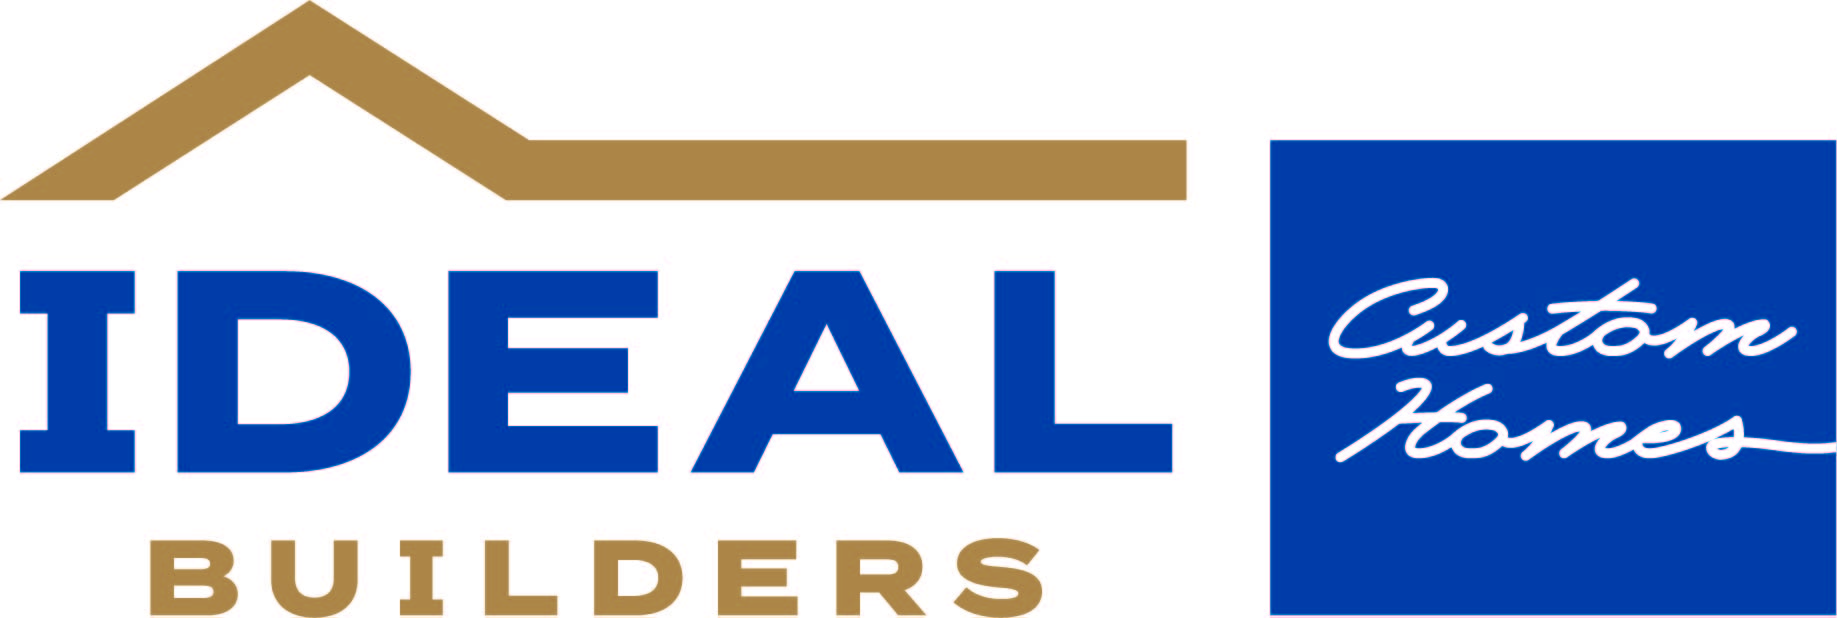 Ideal Builders Logo